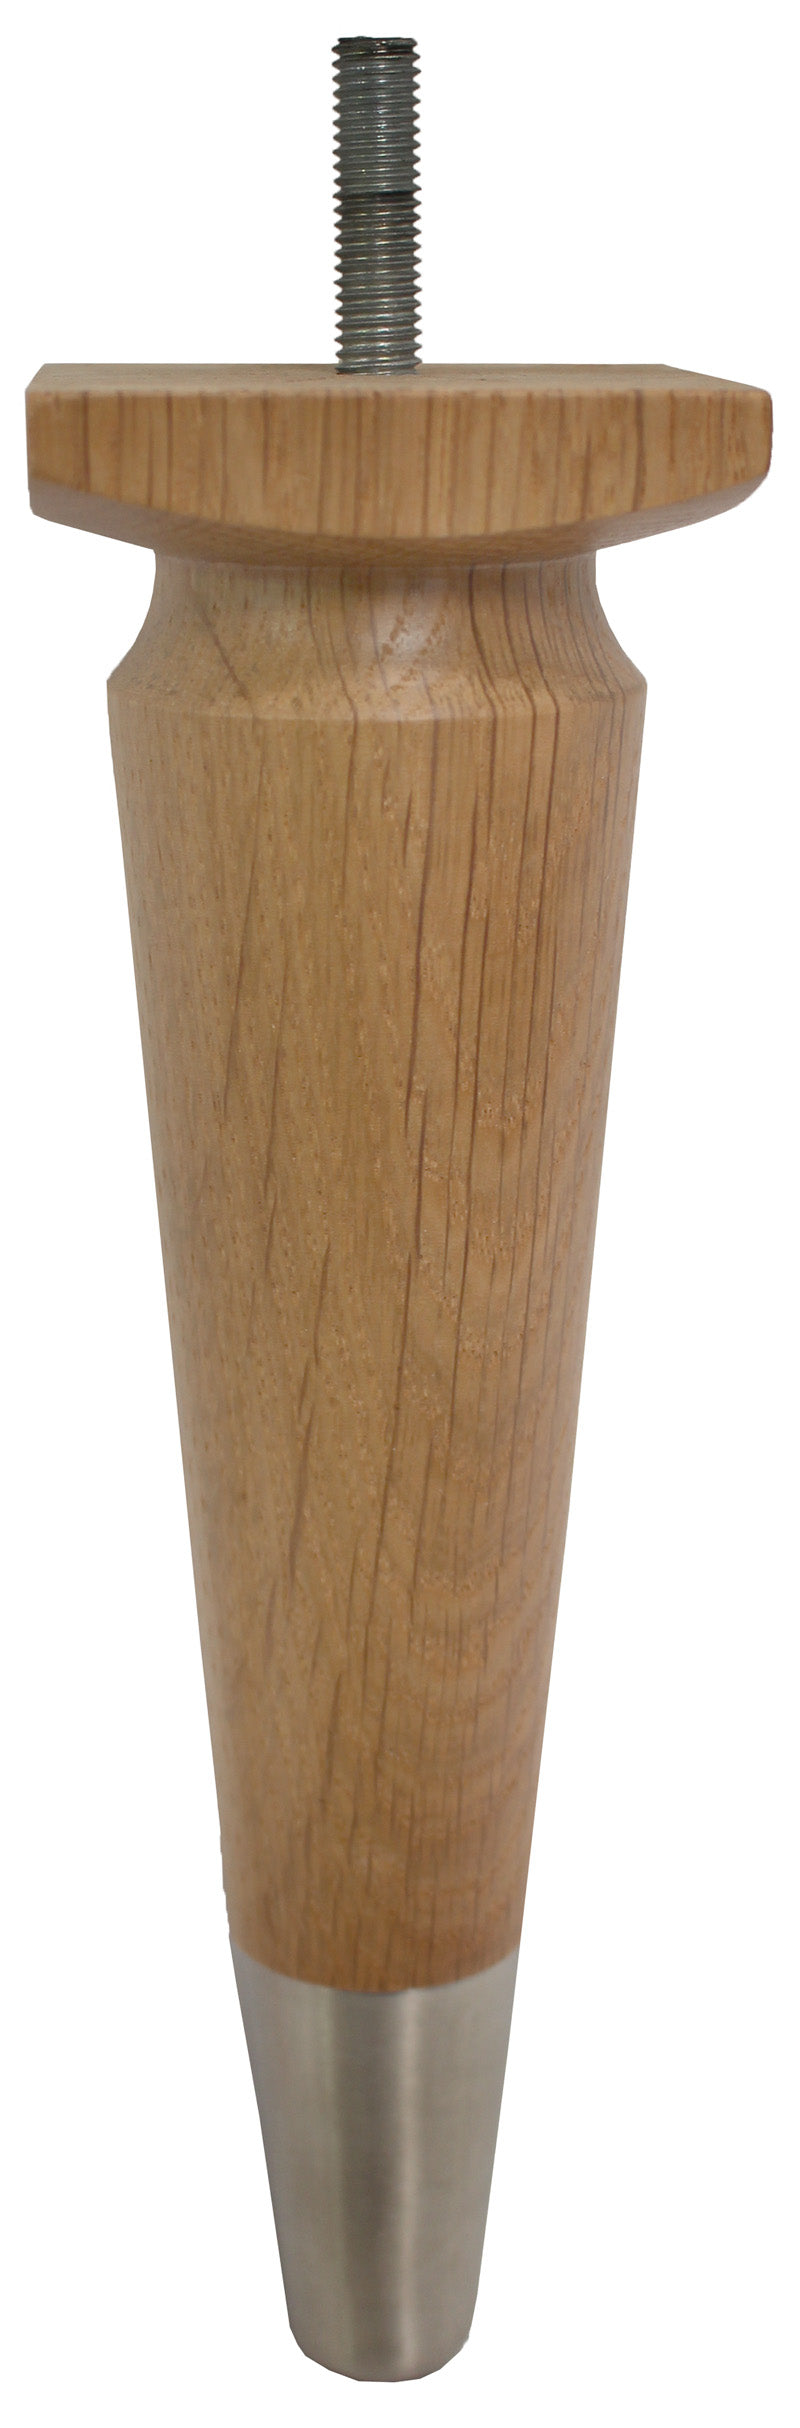 Thelma Solid Oak Furniture Legs - Natural Finish - Satin Slipper Cups - Set of 4